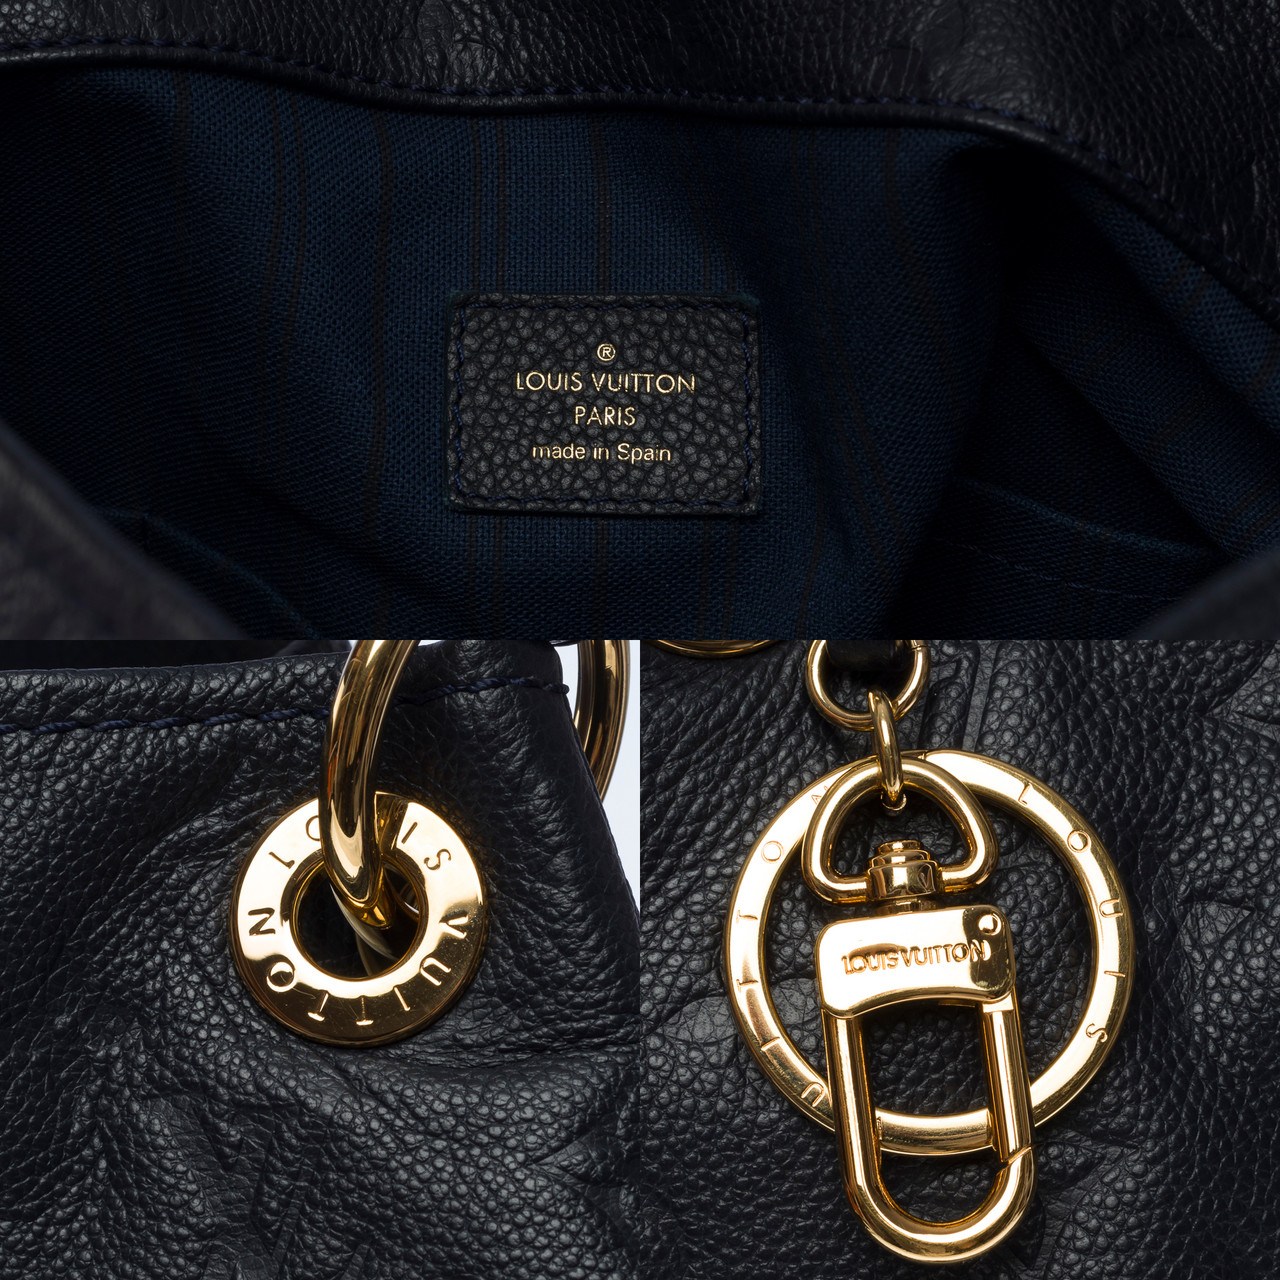 x Louis Vuitton hoodie - 45 - Bag - Vuitton - Monogram - Sac - Souple -  Boston - M41624 – Sac cabas Louis Vuitton Artsy moyen modèle en cuir  monogram marron - Louis